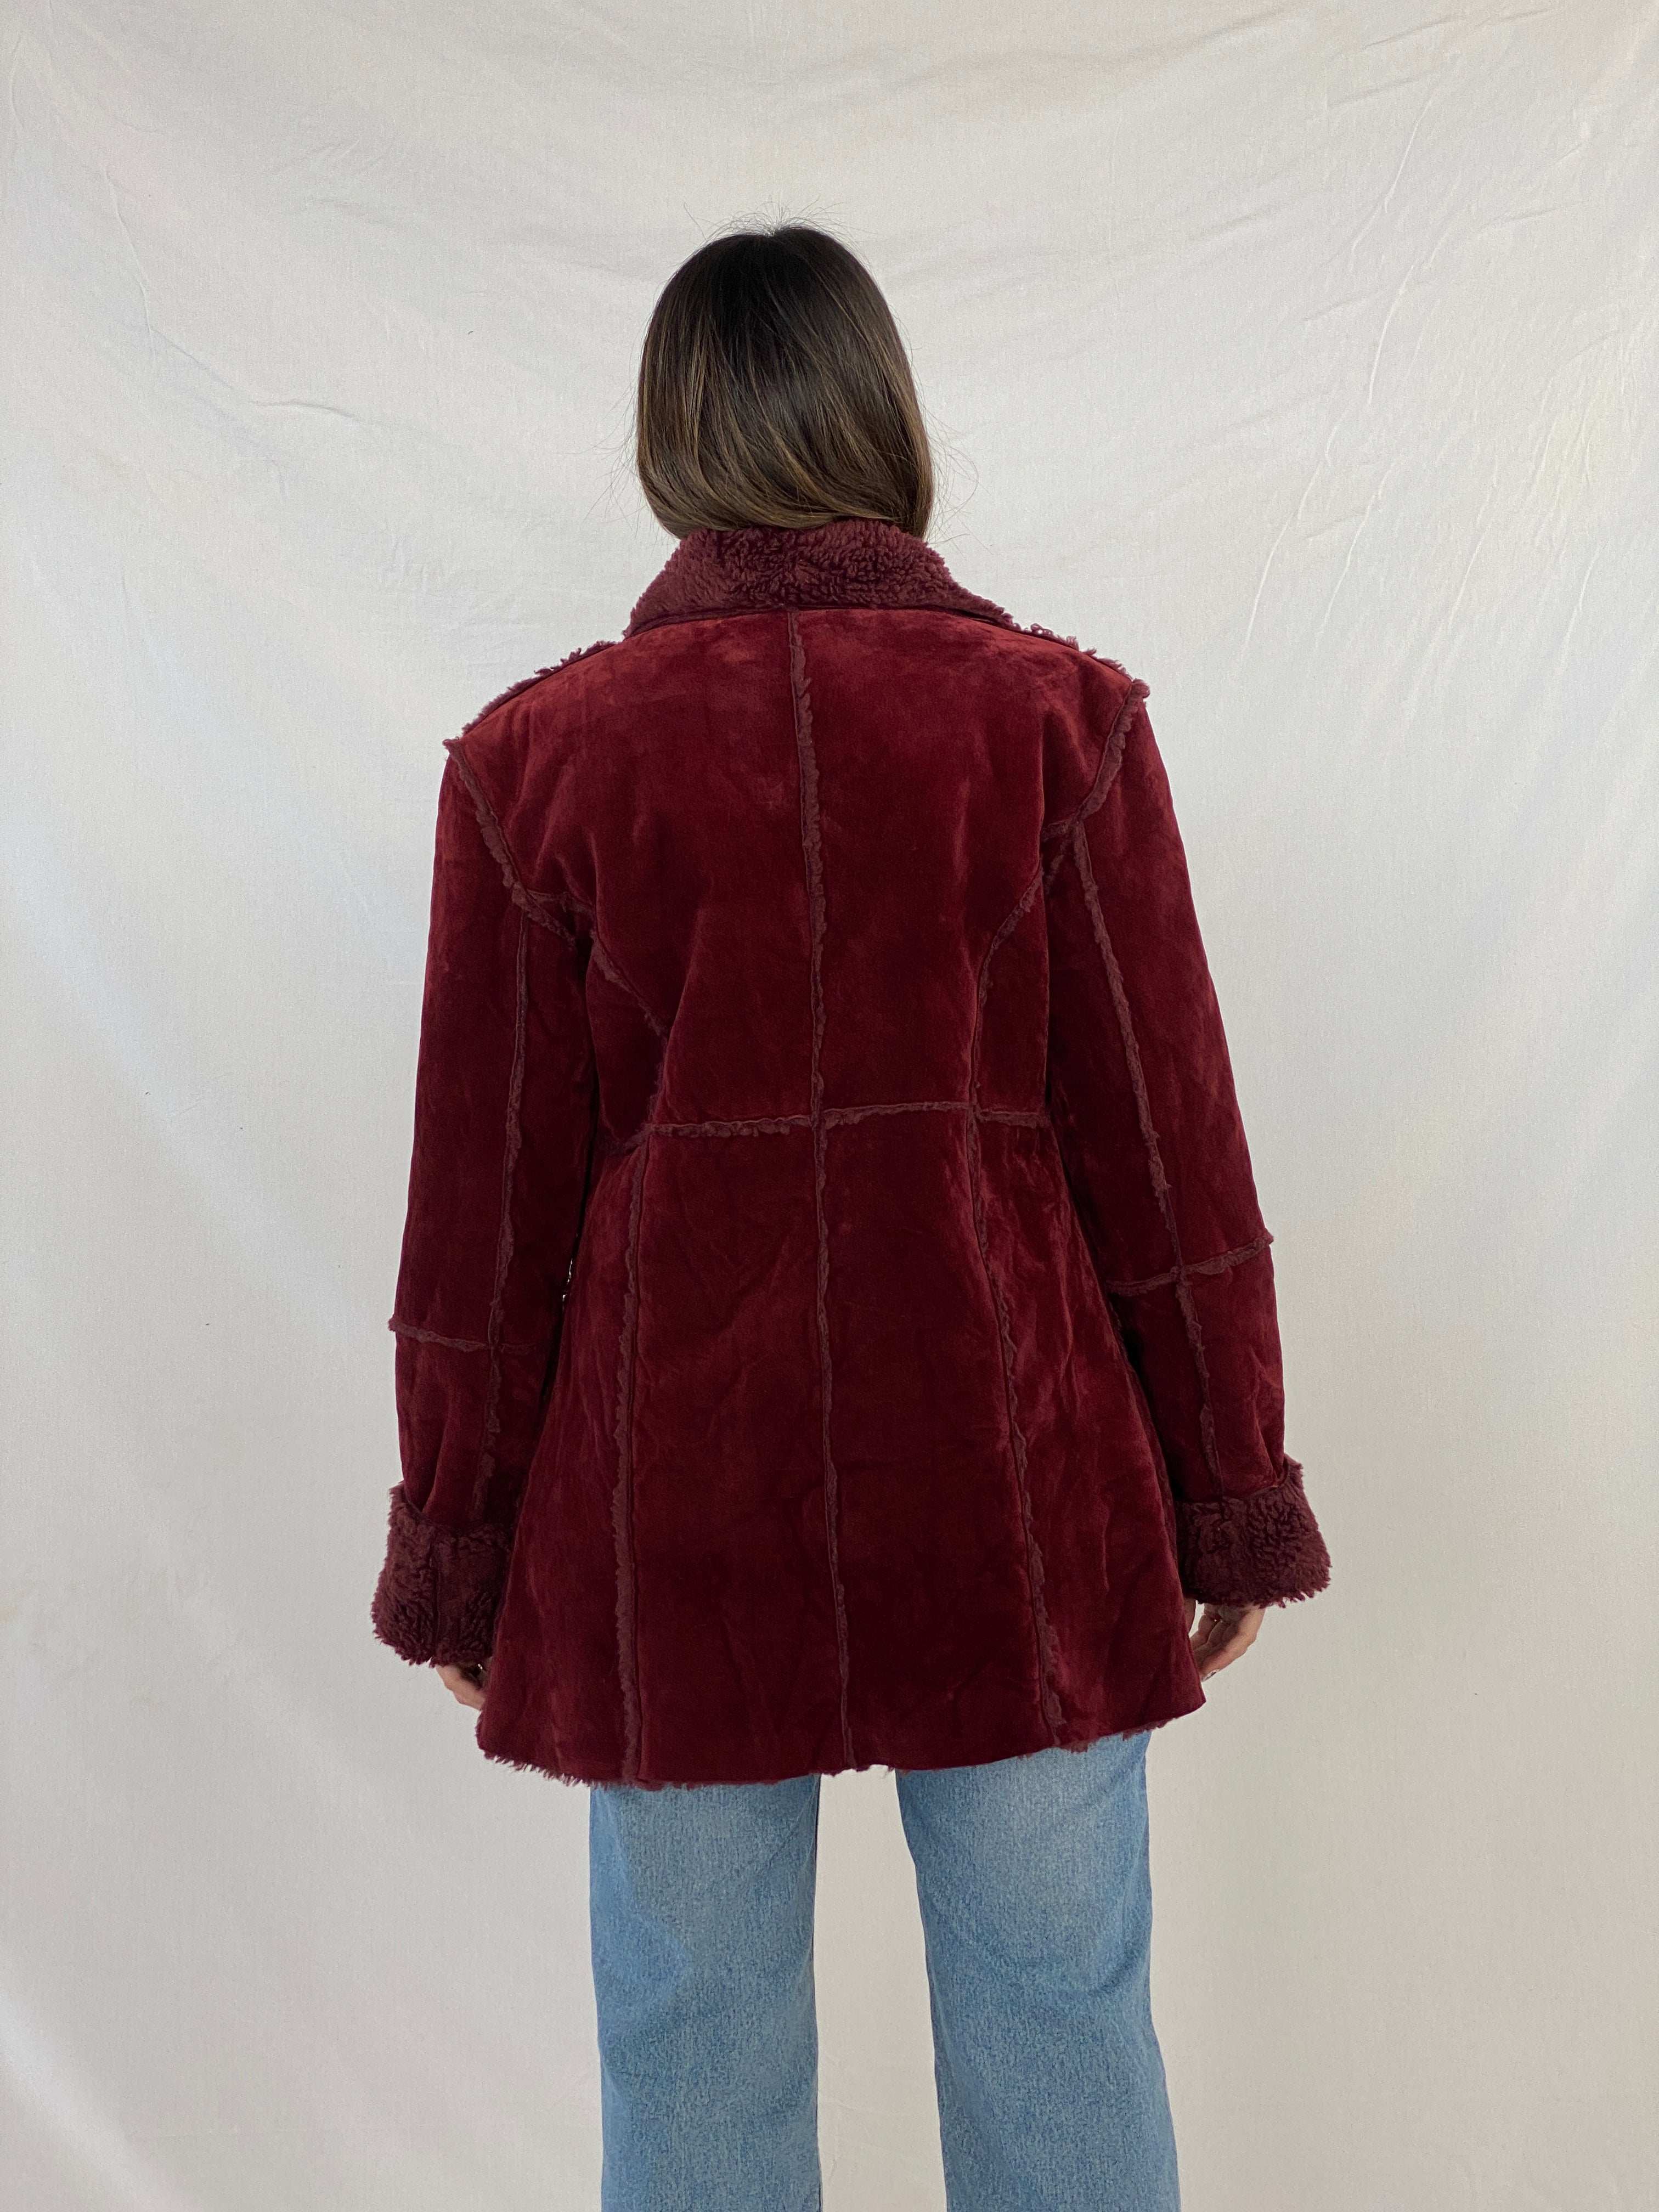 Trump Cast Afghan Style Jacket - Balagan Vintage Coat 00s, 90s, coat, Juana, NEW IN